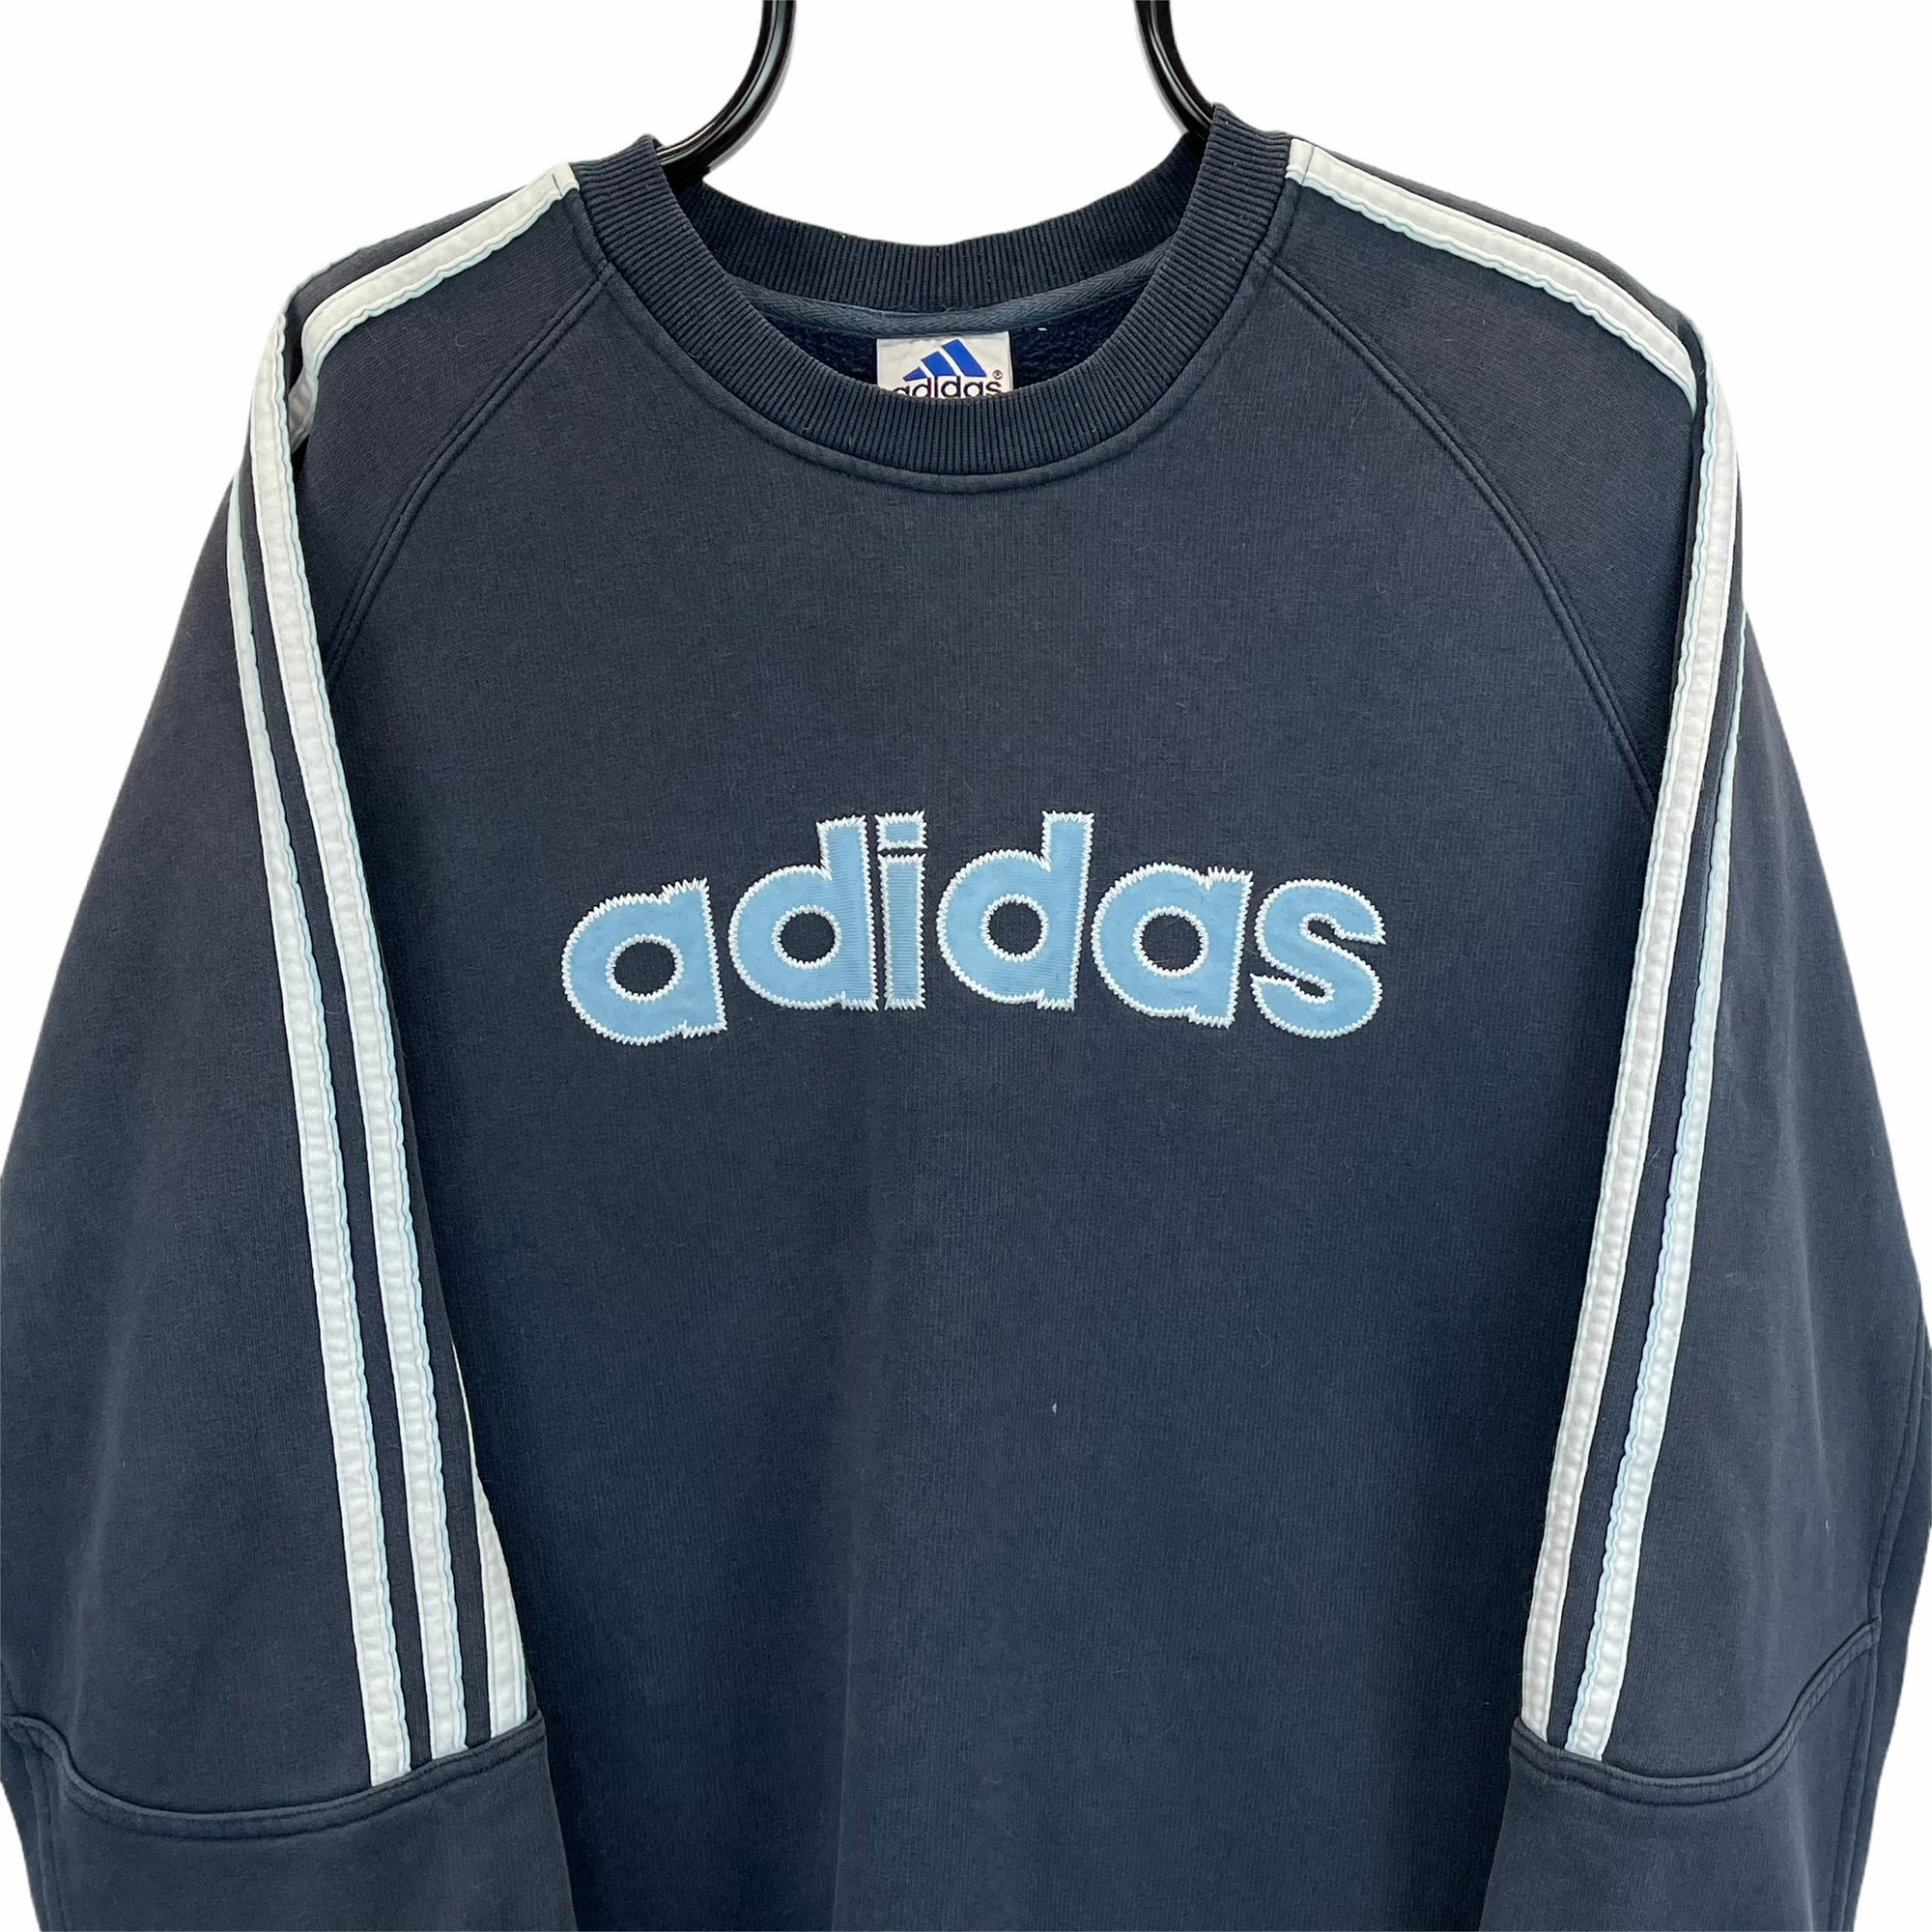 Vintage 90s Adidas Spellout Sweatshirt in Navy & Baby Blue - Men's Medium/Women's Large